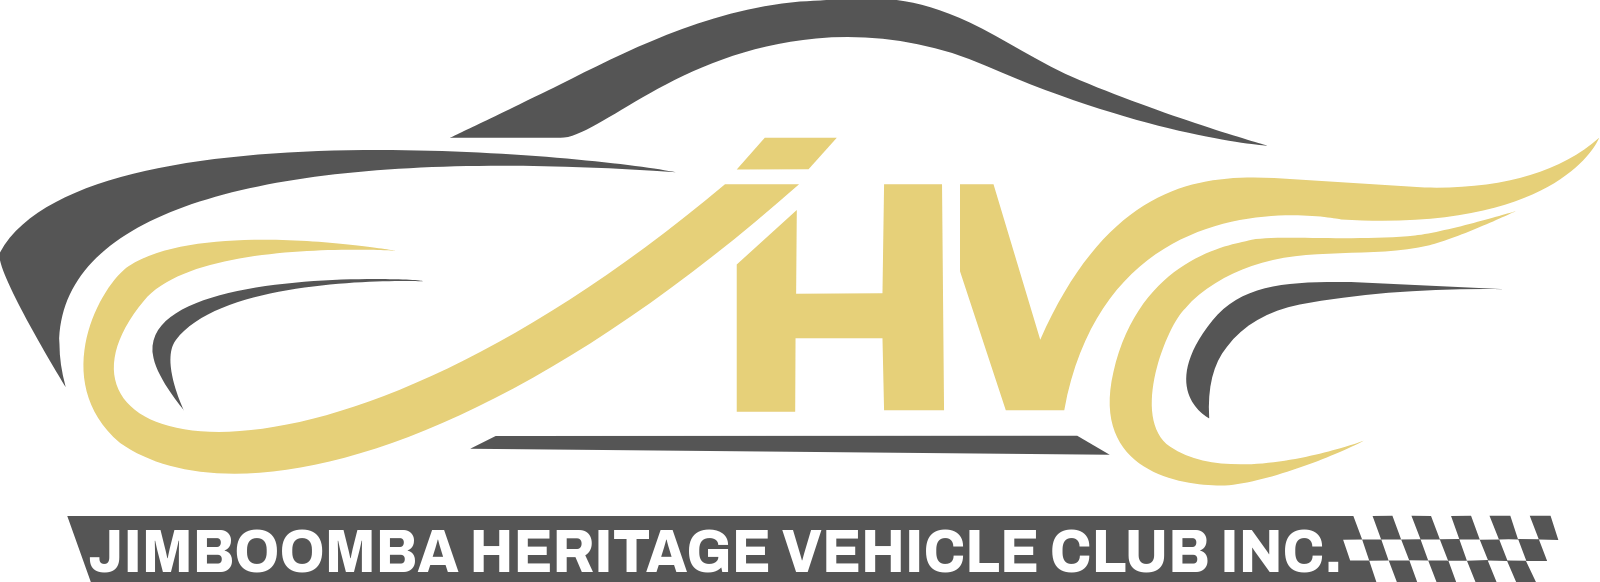 Jimboomba Heritage Vehicle Club 